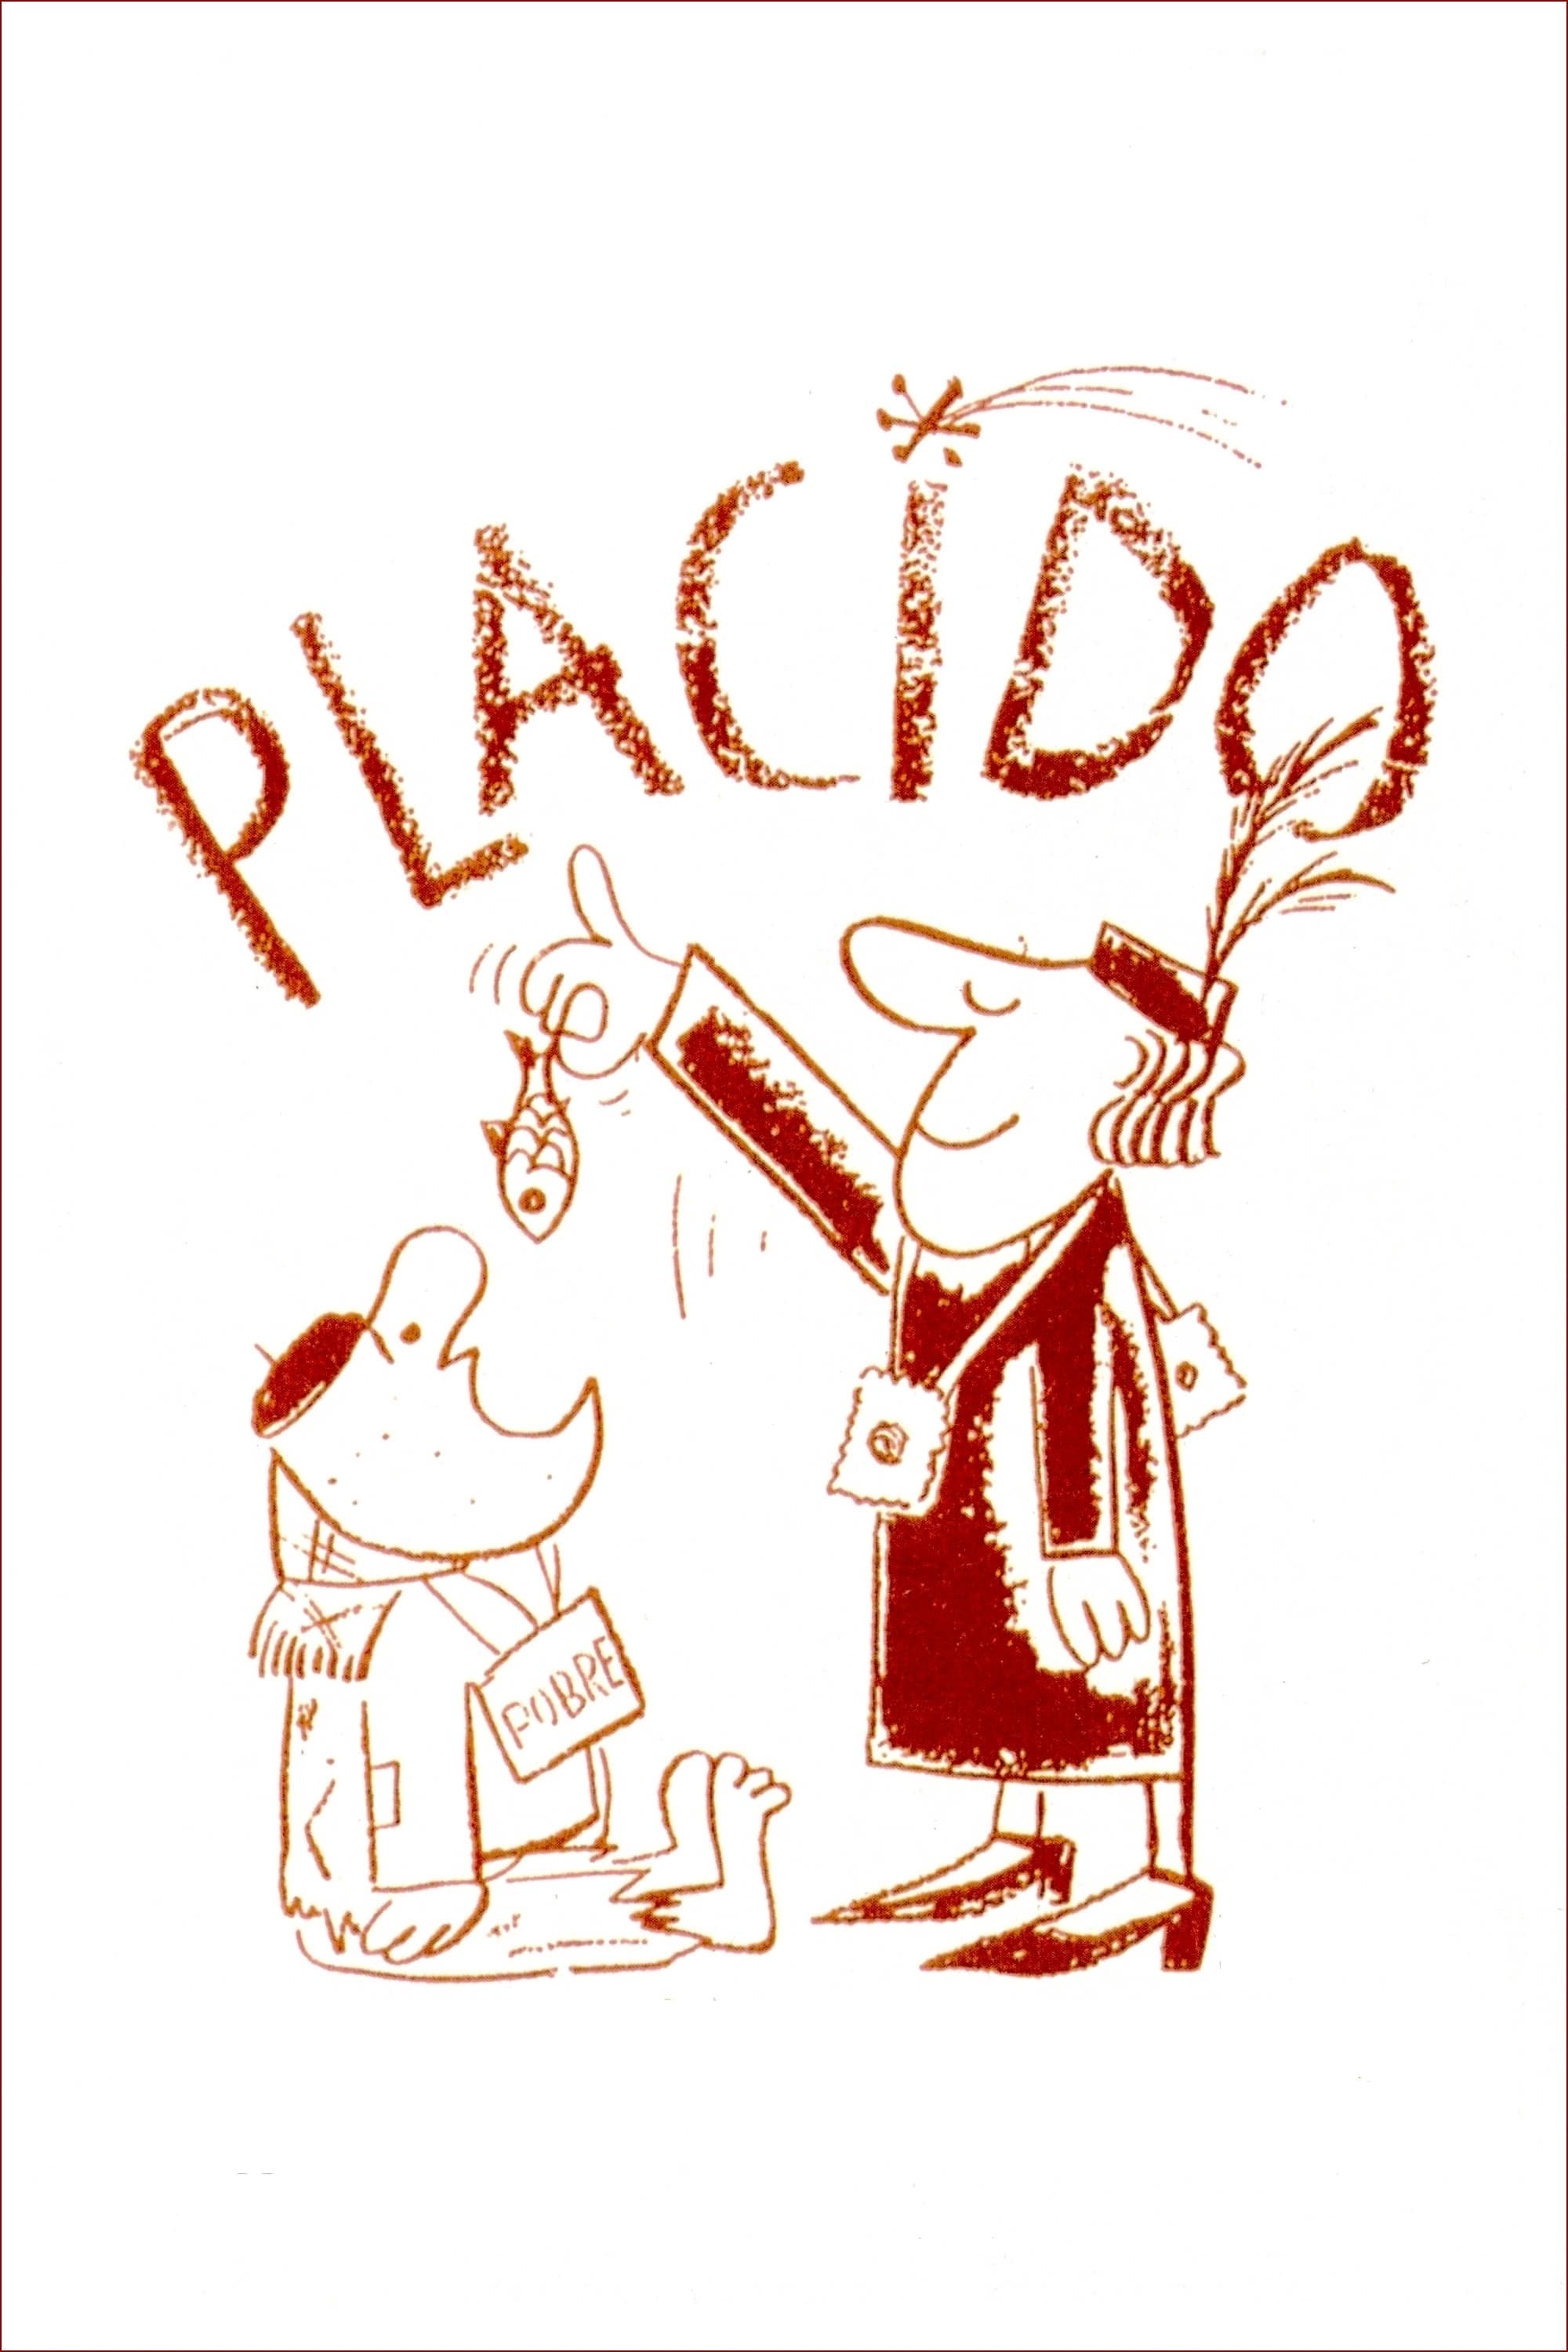 Placido (1962)